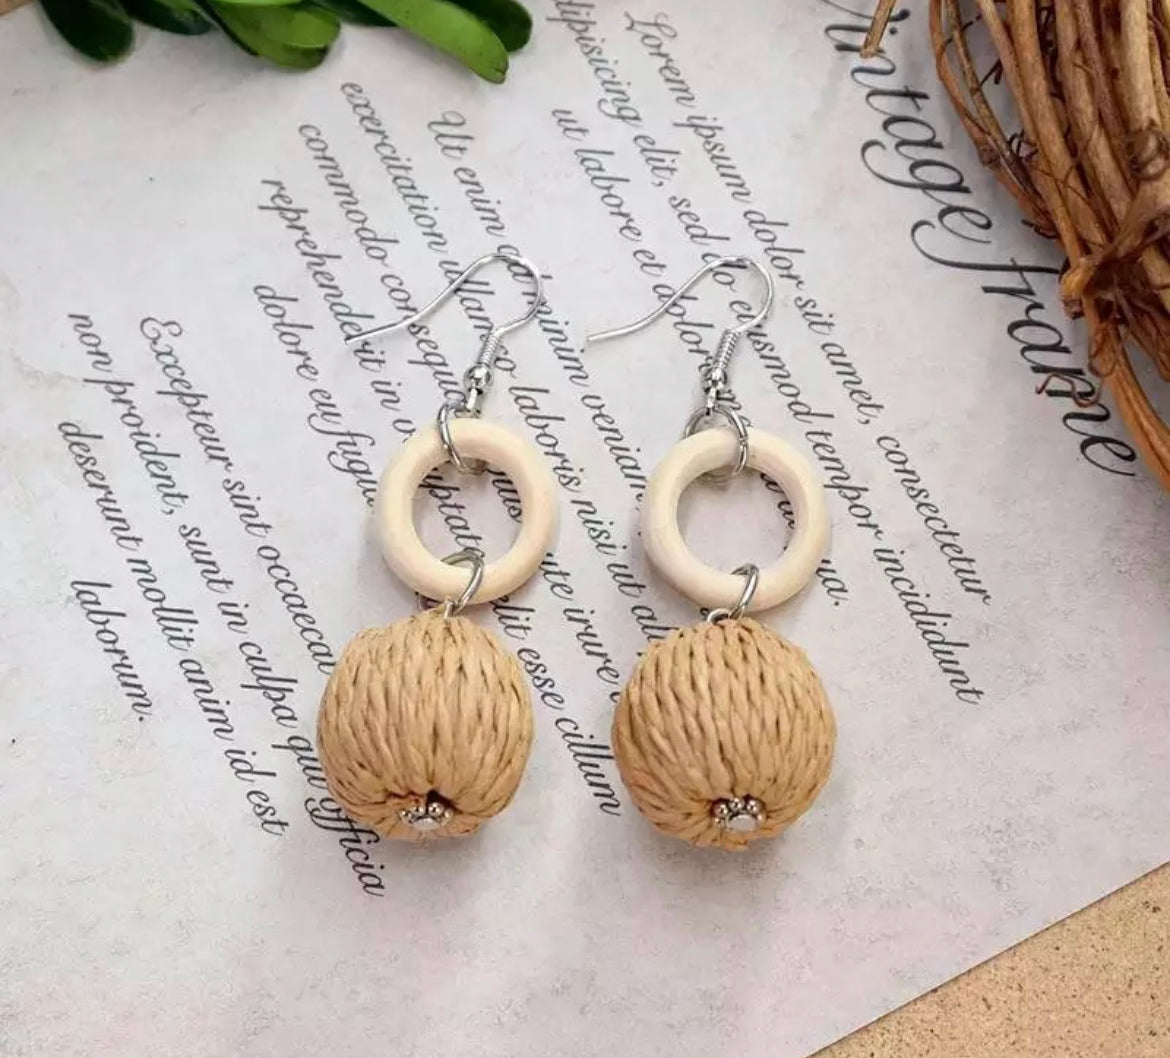 How to make beautiful Earrings using Coconut Shell || Handmade Jewellery -  YouTube